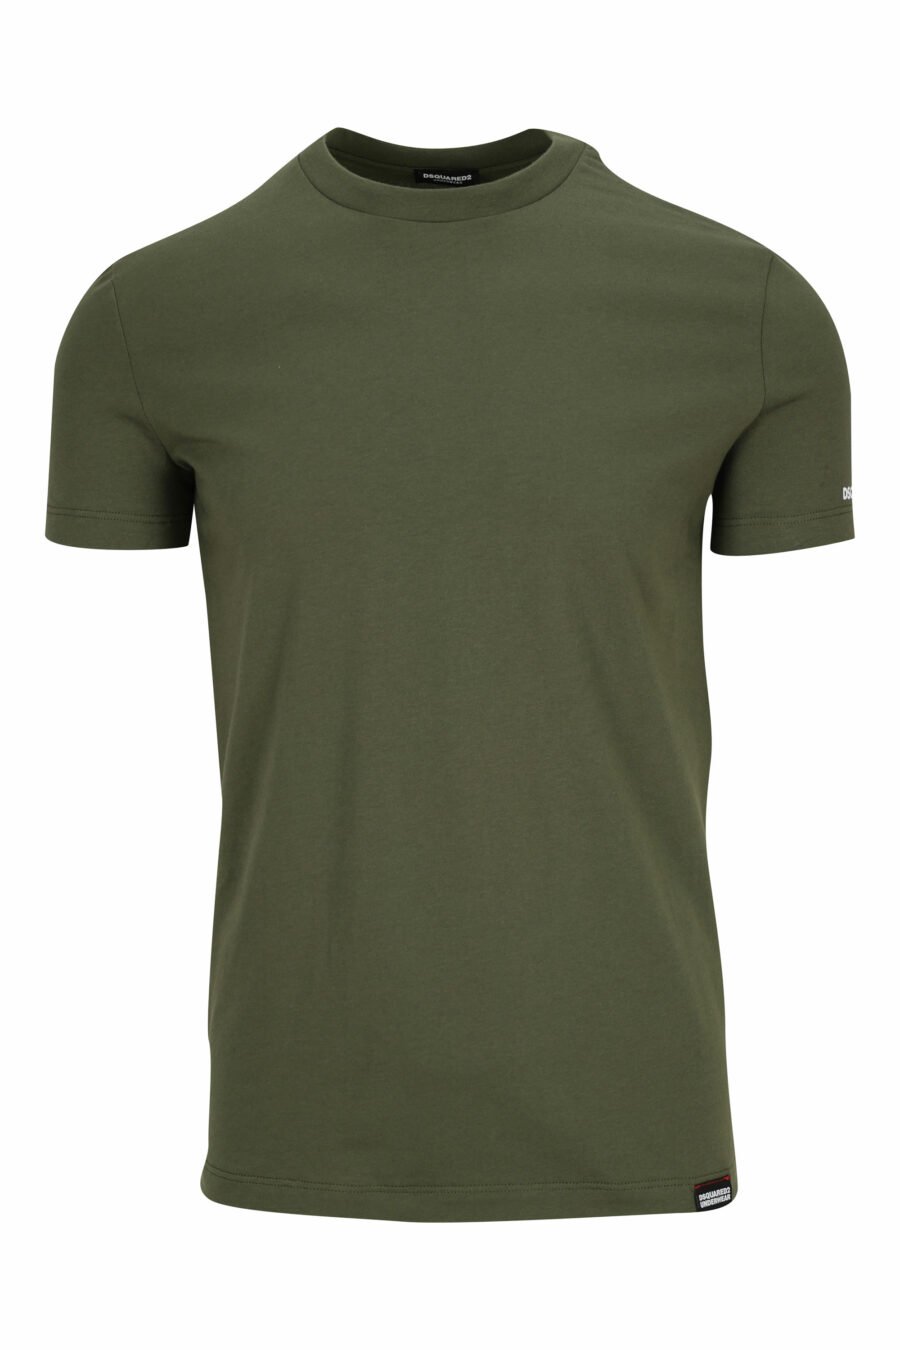 Camiseta verde militar con minilogo "underwear" blanco - 8032674811622